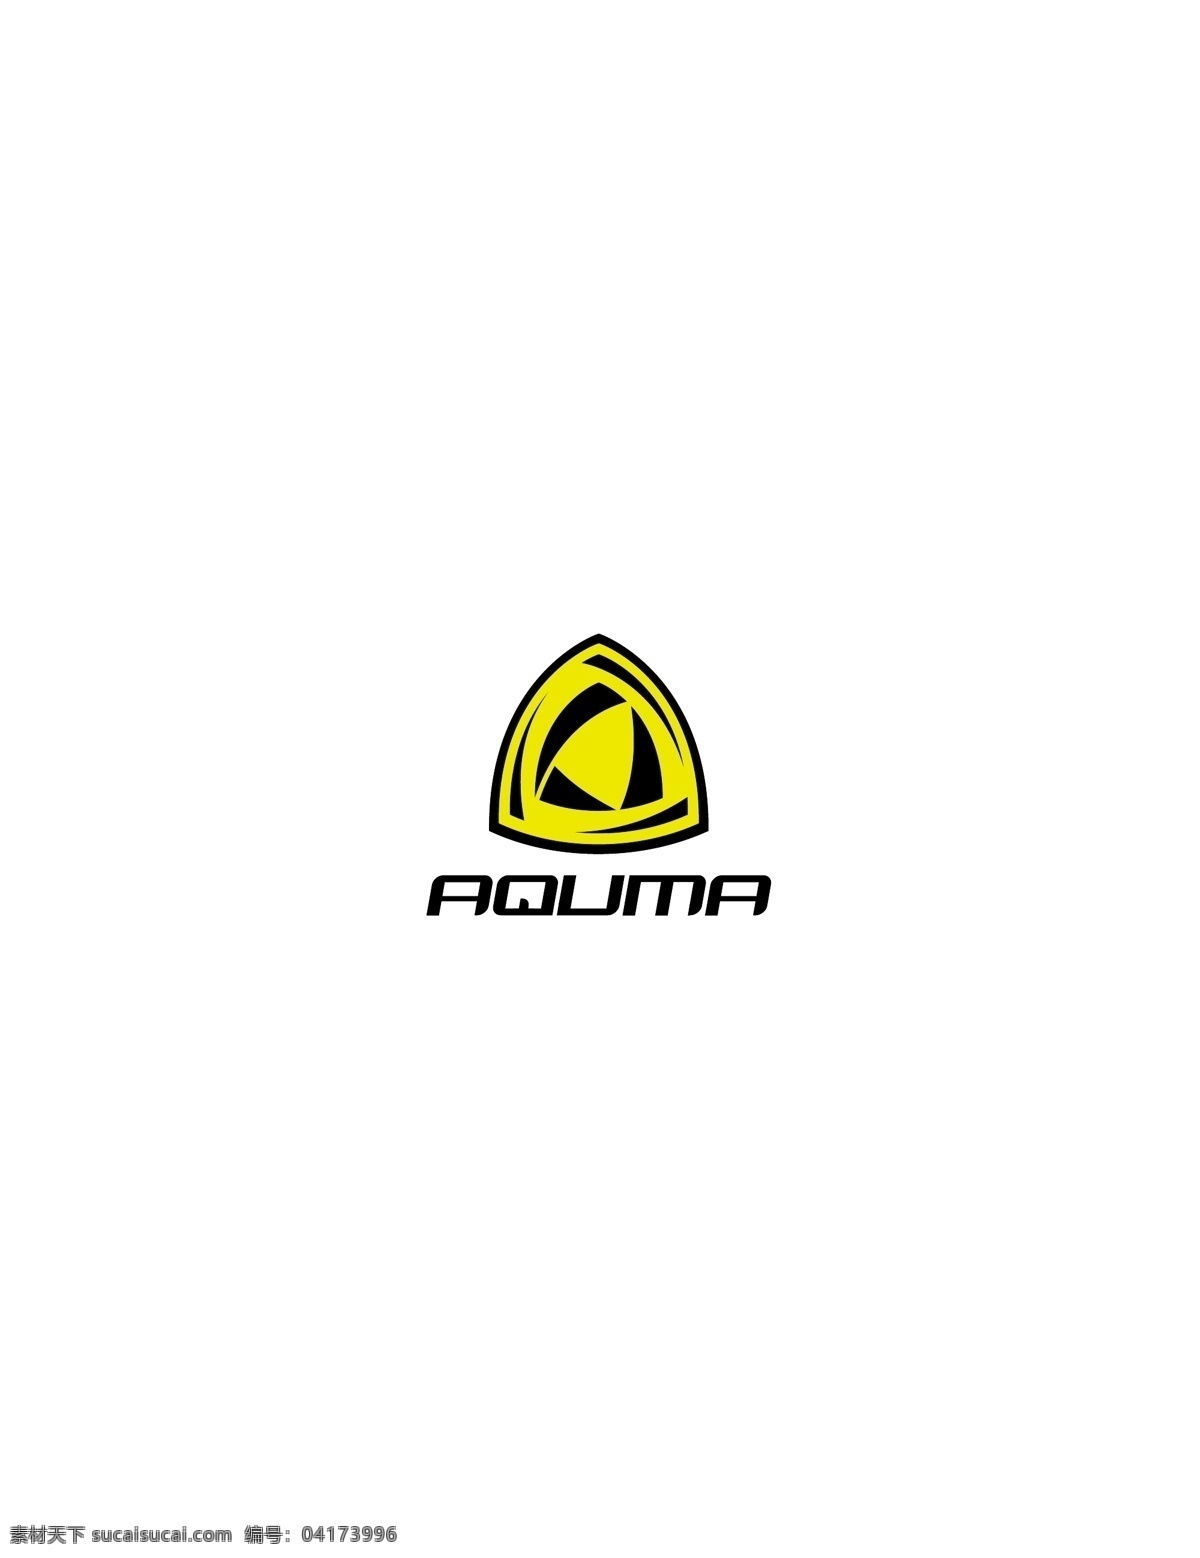 aquma logo大全 logo 设计欣赏 商业矢量 矢量下载 服装 品牌 标志 标志设计 欣赏 网页矢量 矢量图 其他矢量图